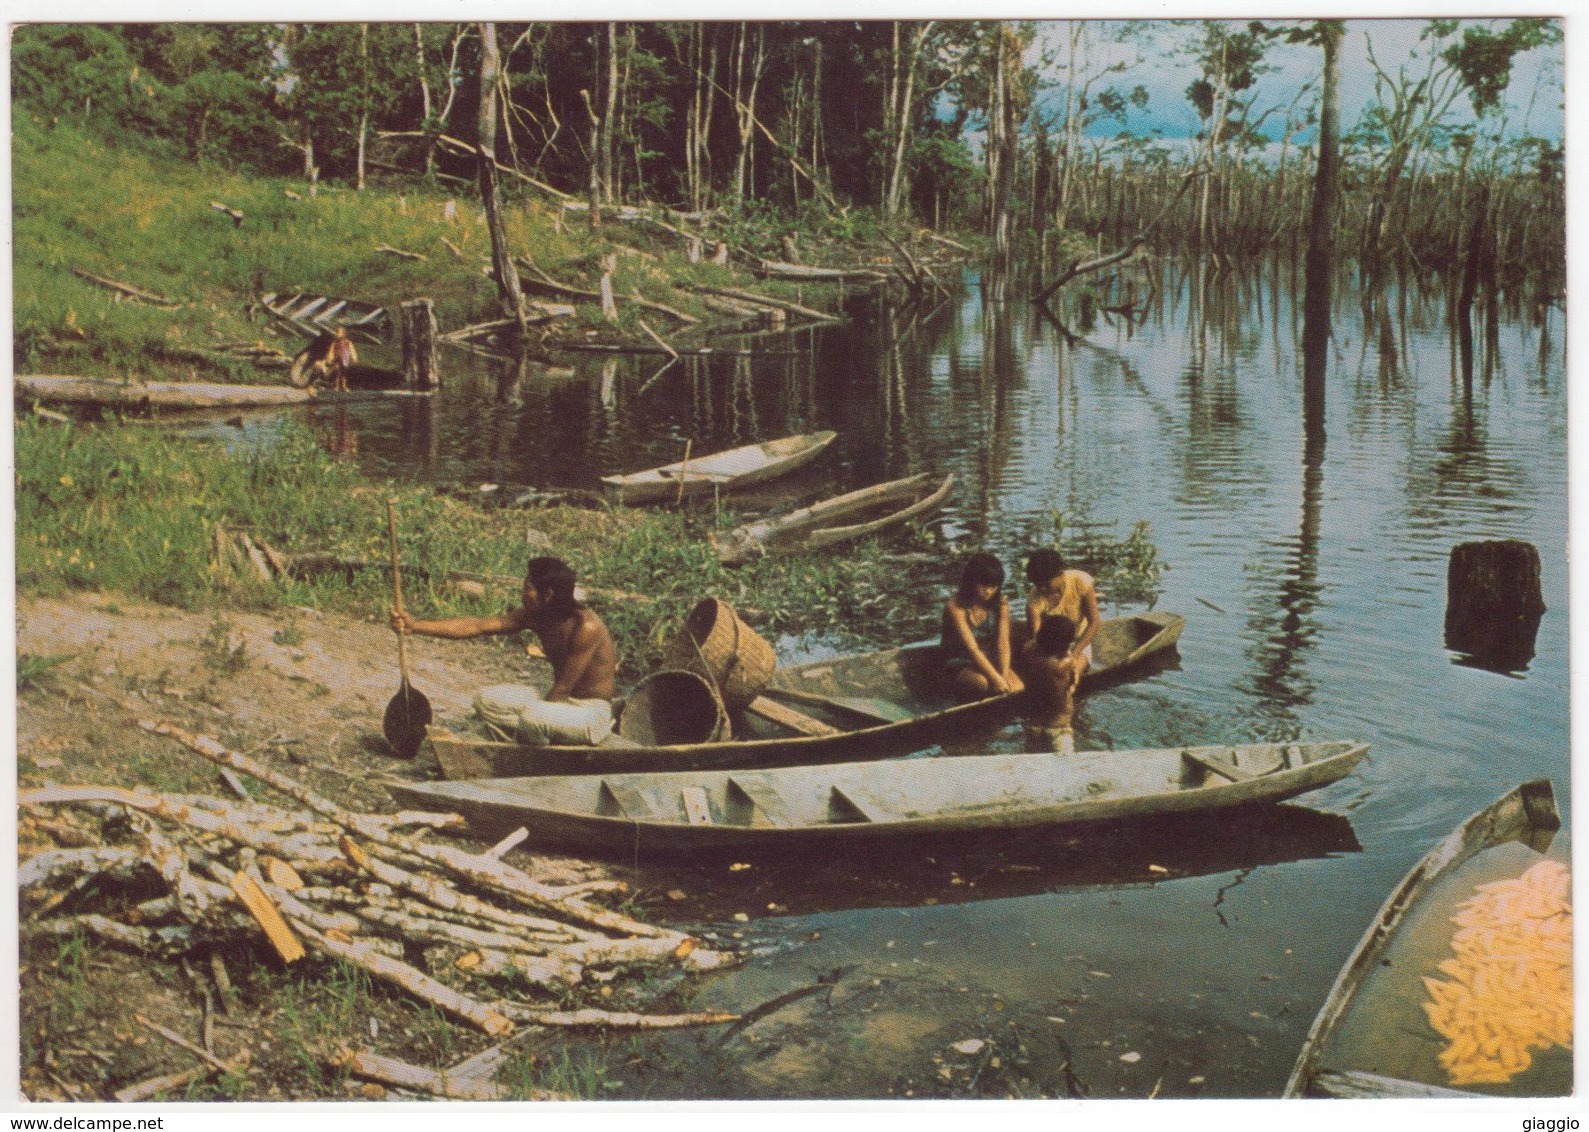 °°° 13790 - BRASIL - MISSIONARI CAPPUCCINI IN AMAZZONIA - INDI TIKUNAS AL PORTO °°° - Manaus